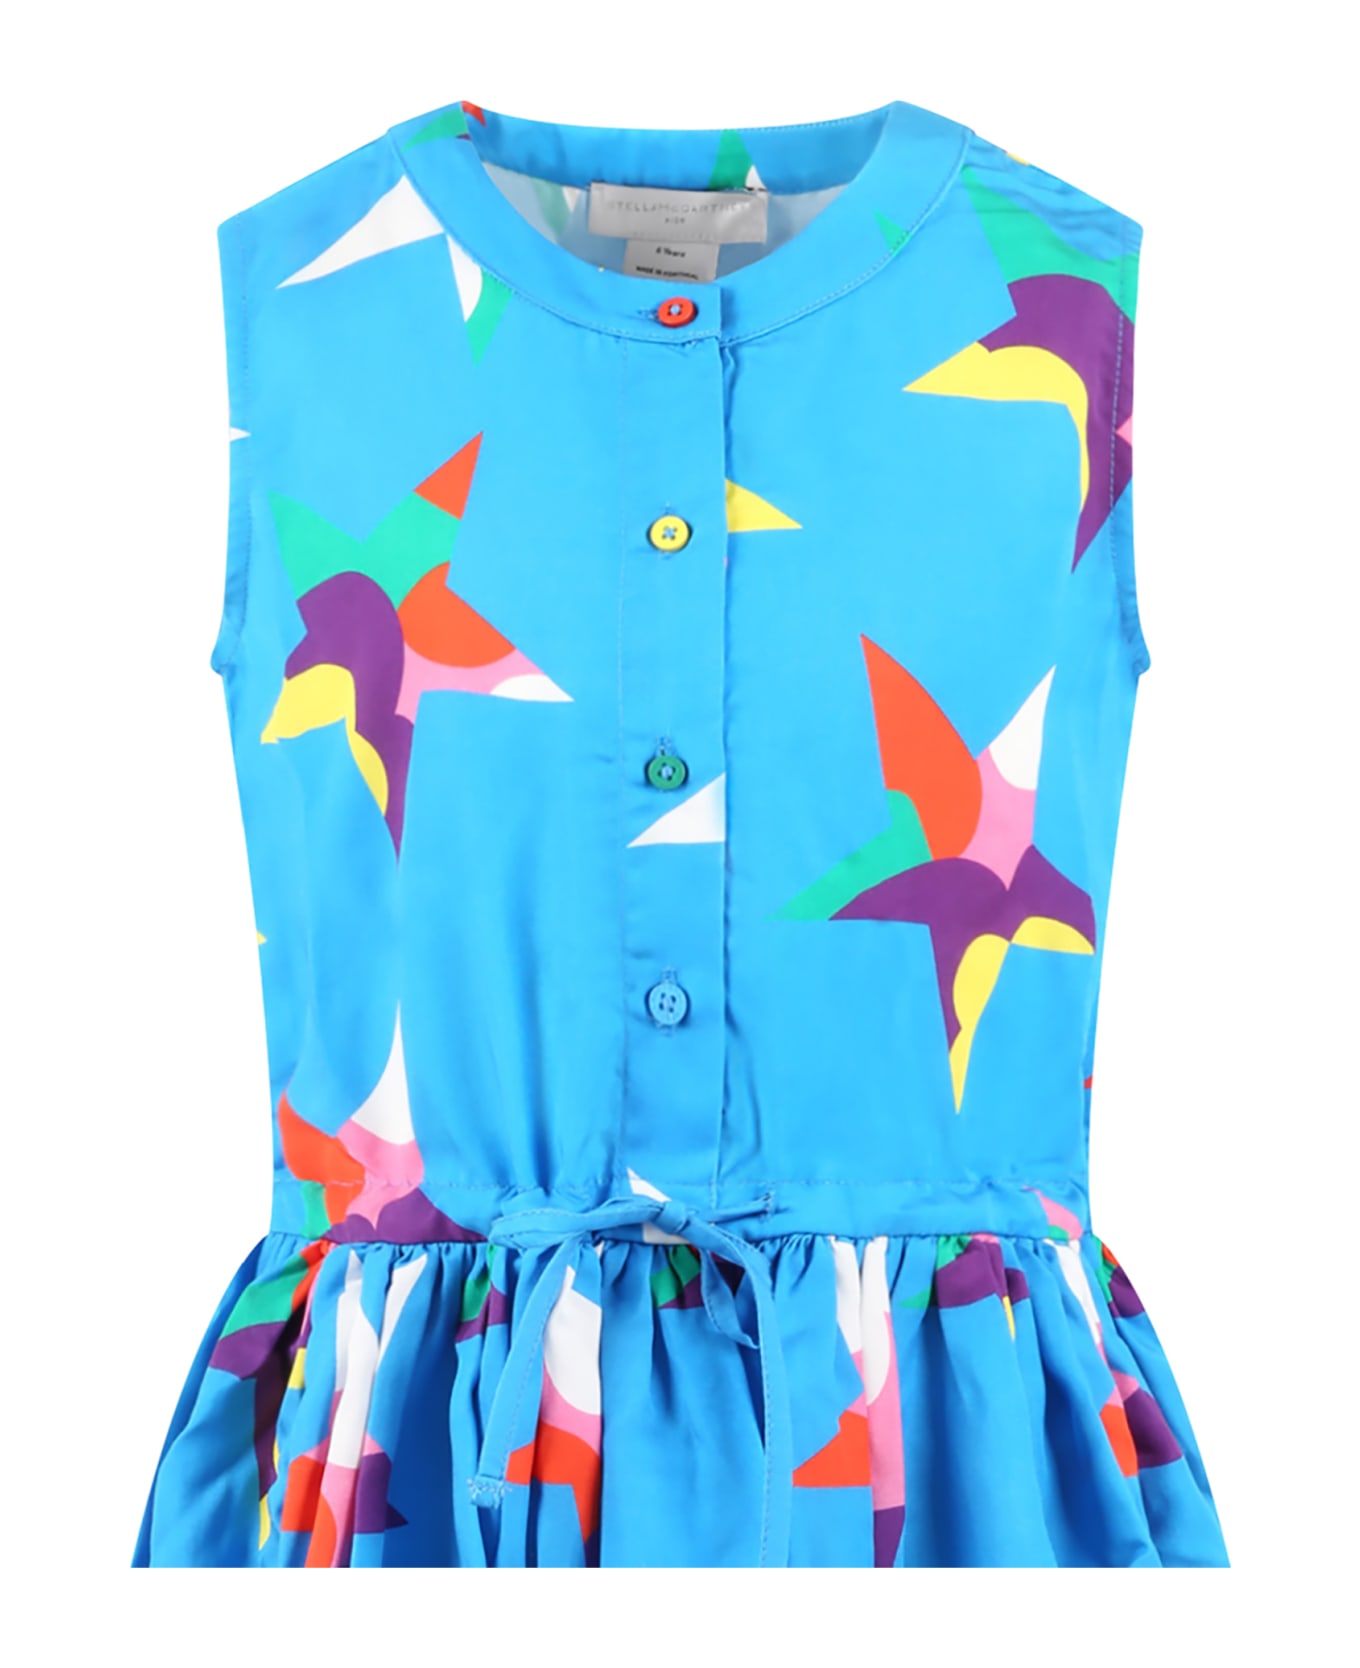 Stella McCartney Kids Light-blue Dress For Girl With Colorful Stars - Light Blue